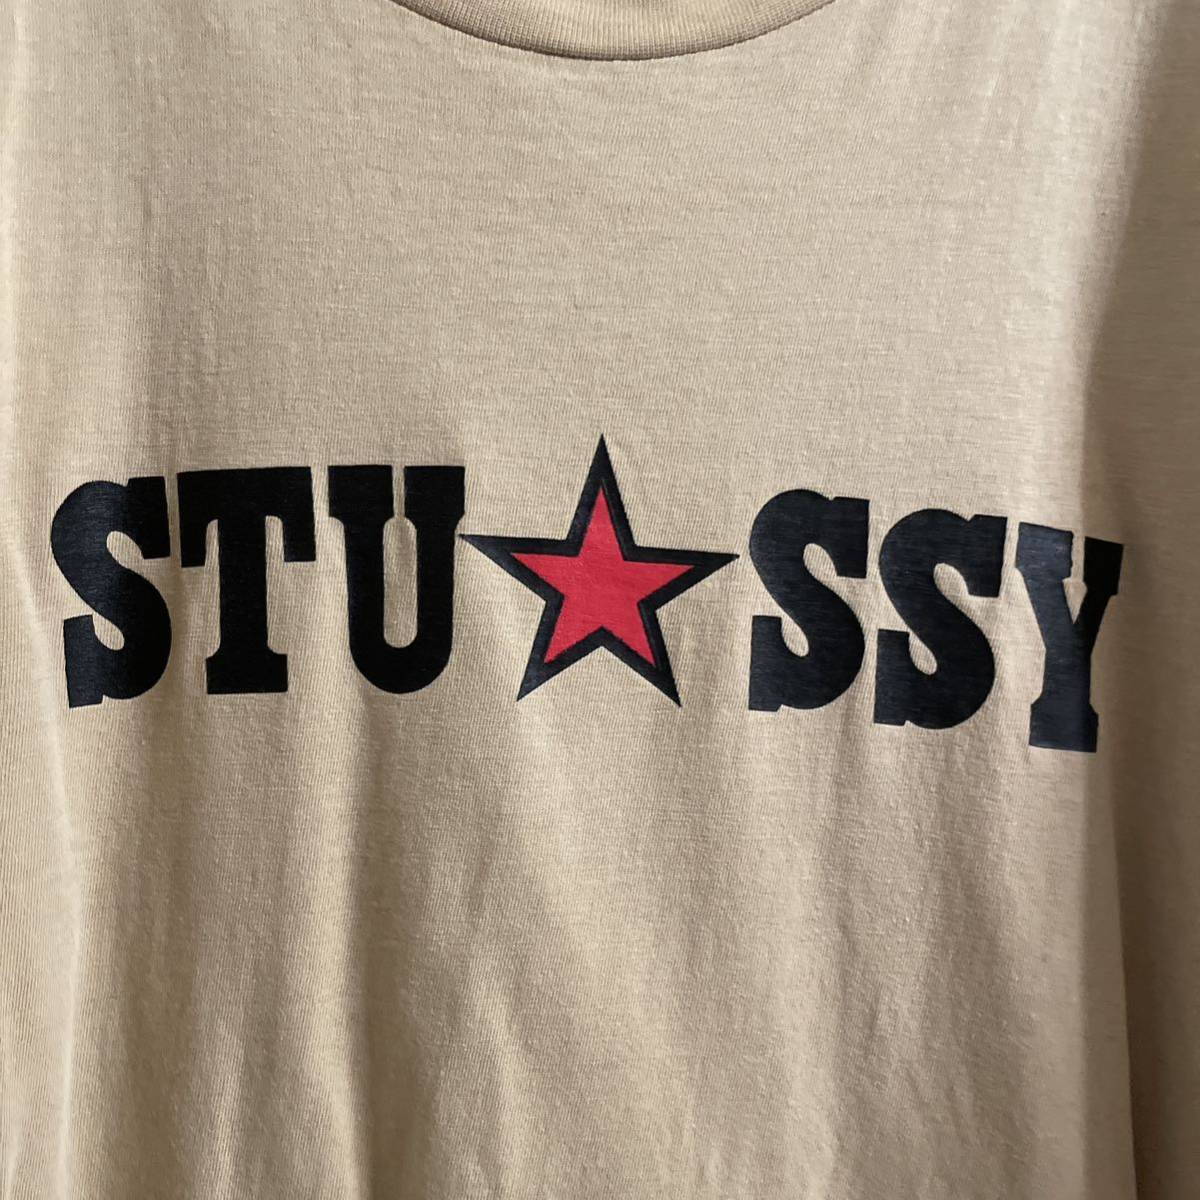 80's 90's old stussy ステューシー 黒タグ tシャツ ヴィンテージ